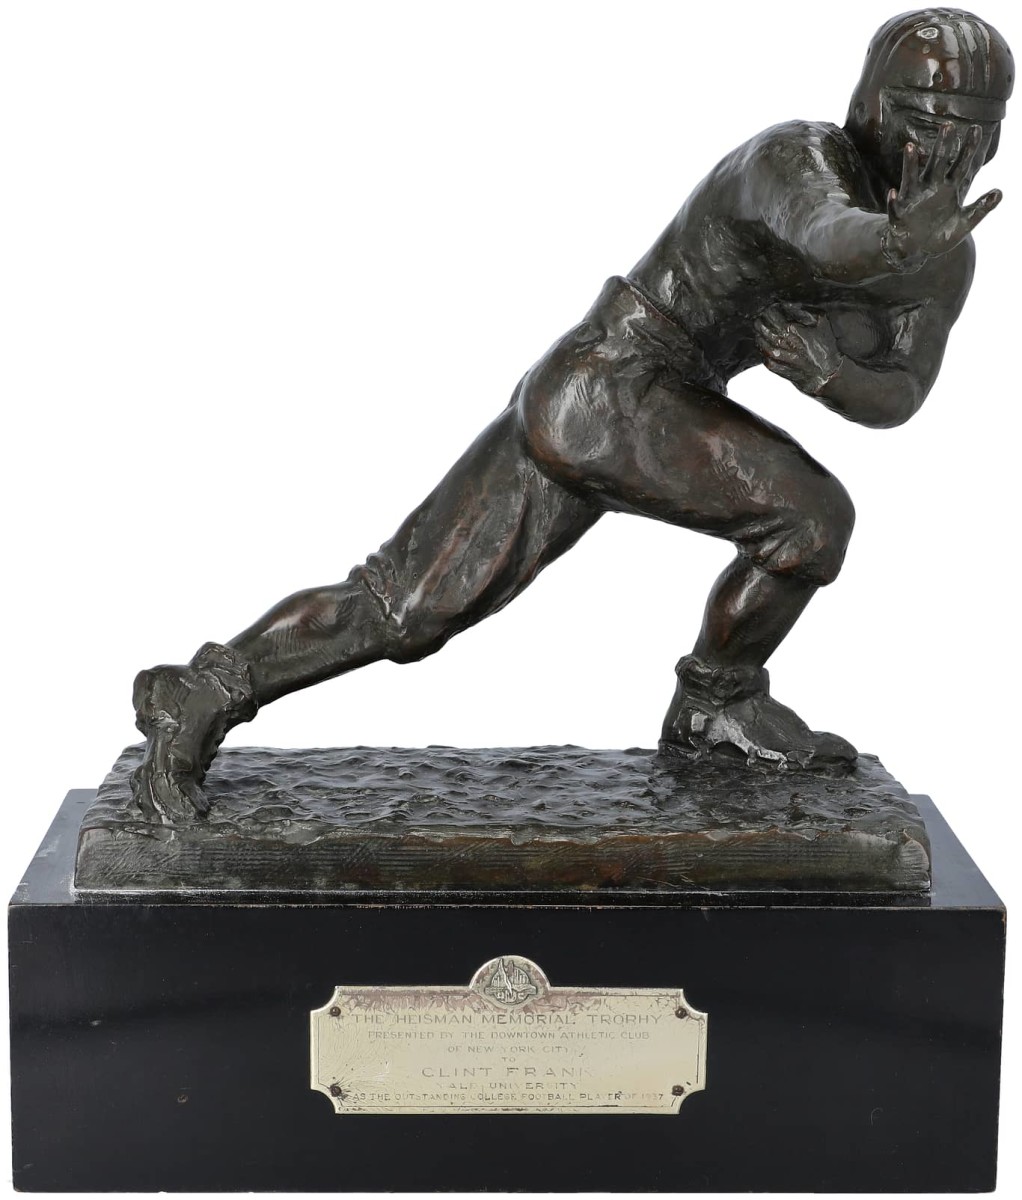 1937 Heisman Trophy presented to Clint Frank.